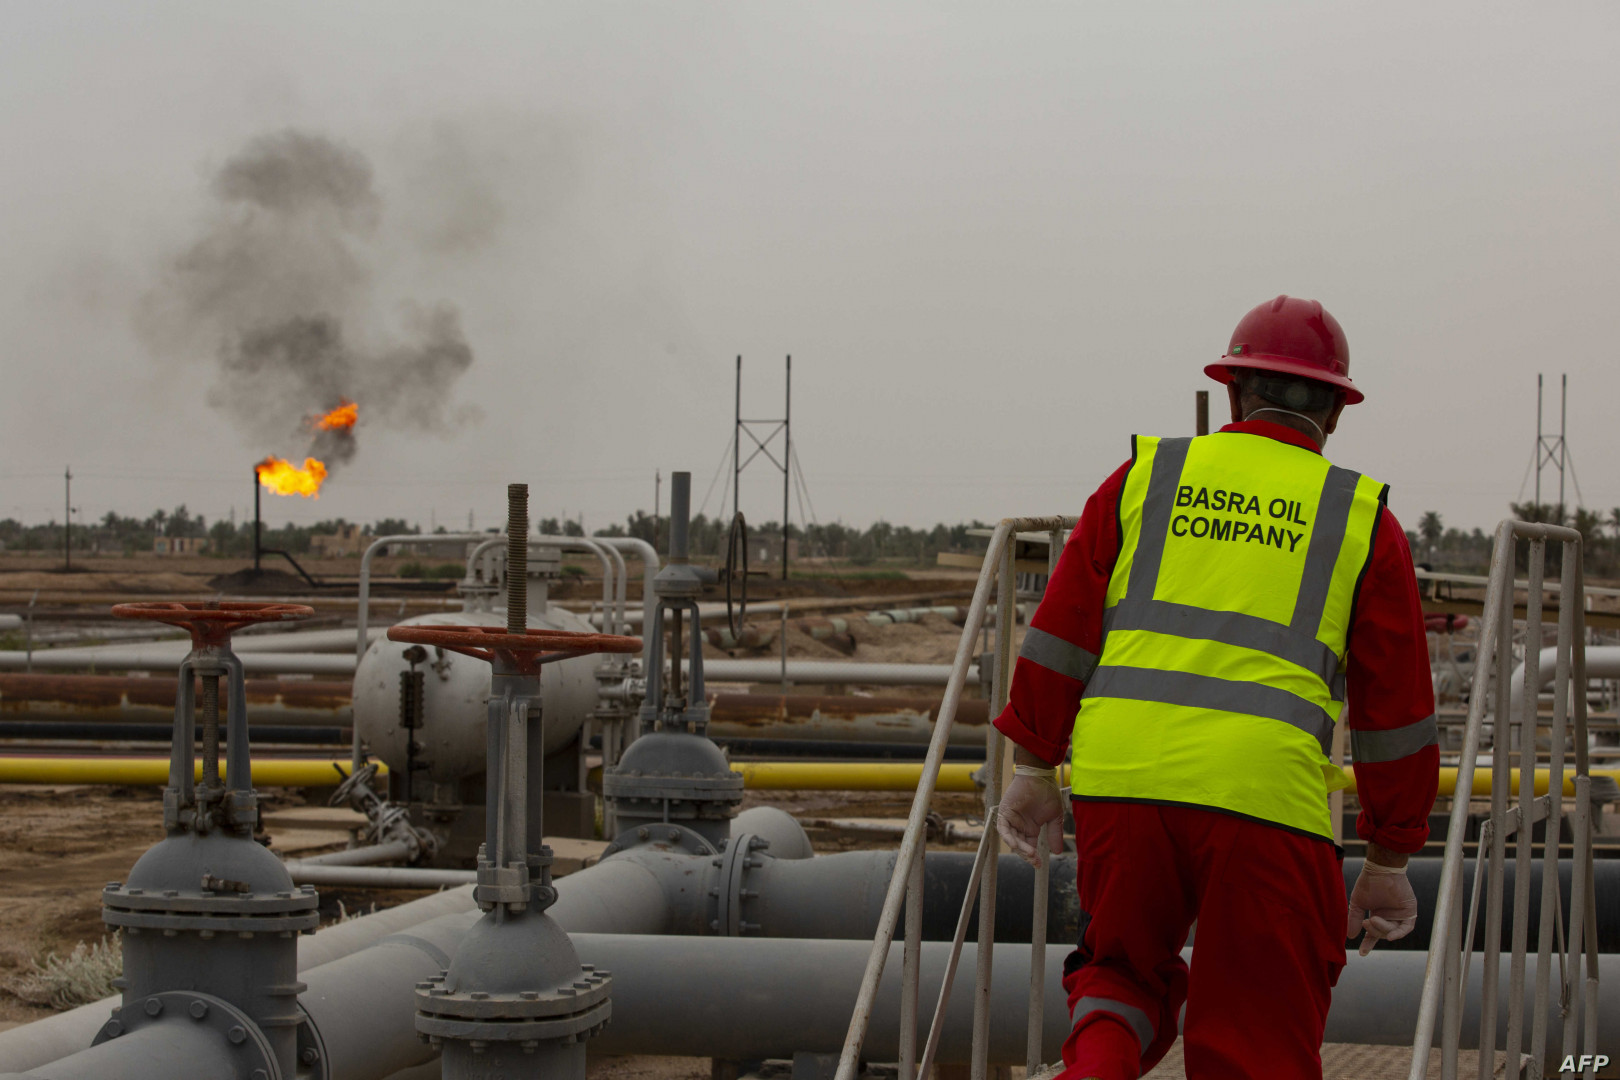 Basra crude shrugs +12$ this week as the global market settles down